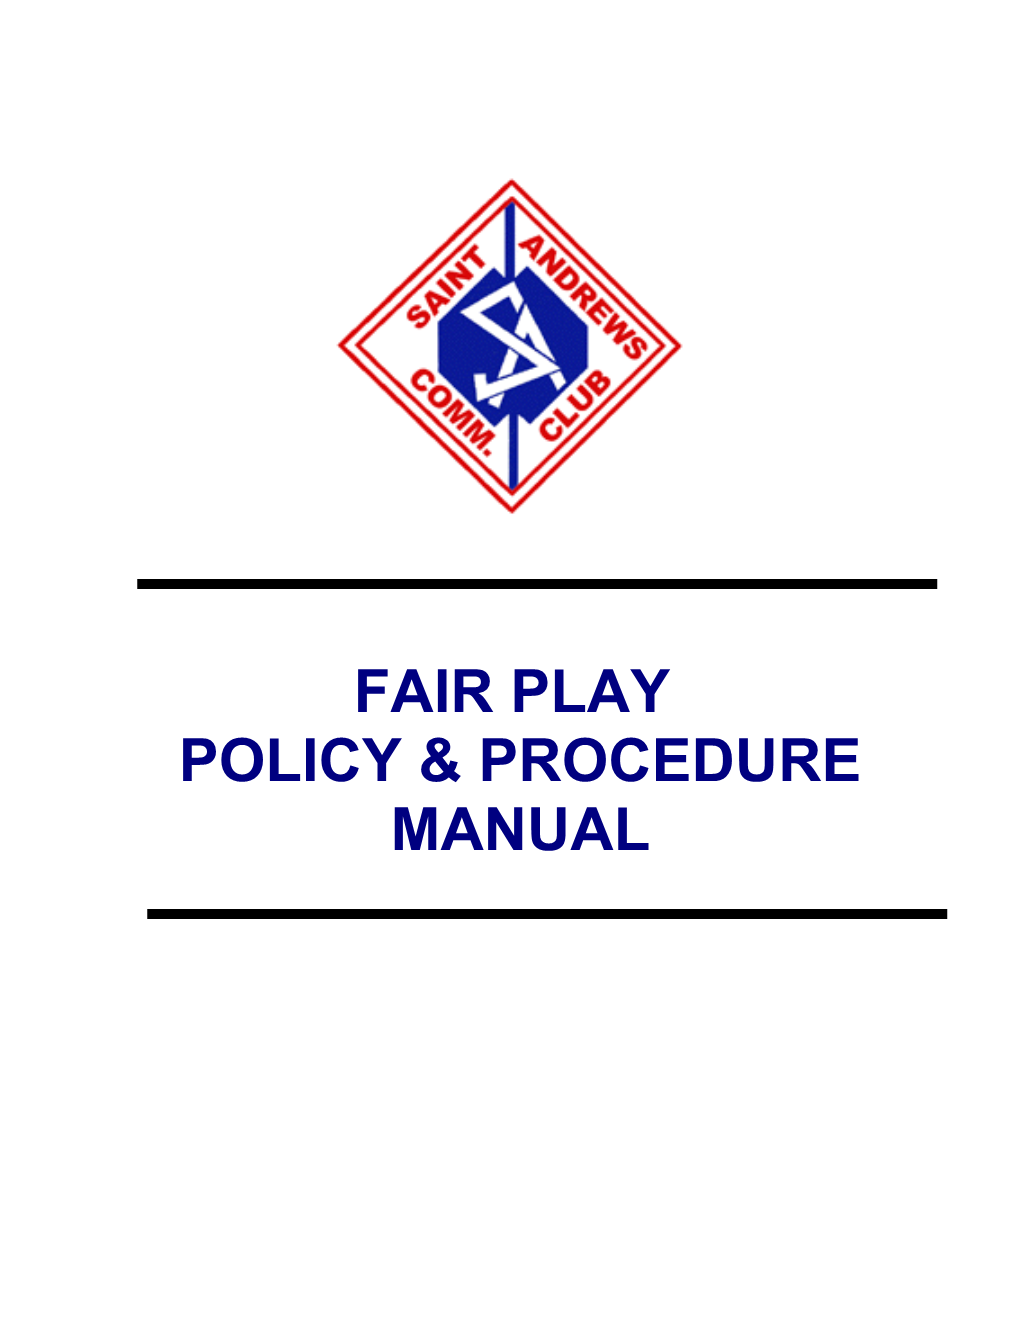 Fair Play Policy & Procedure Manual St. Andrews Community Club